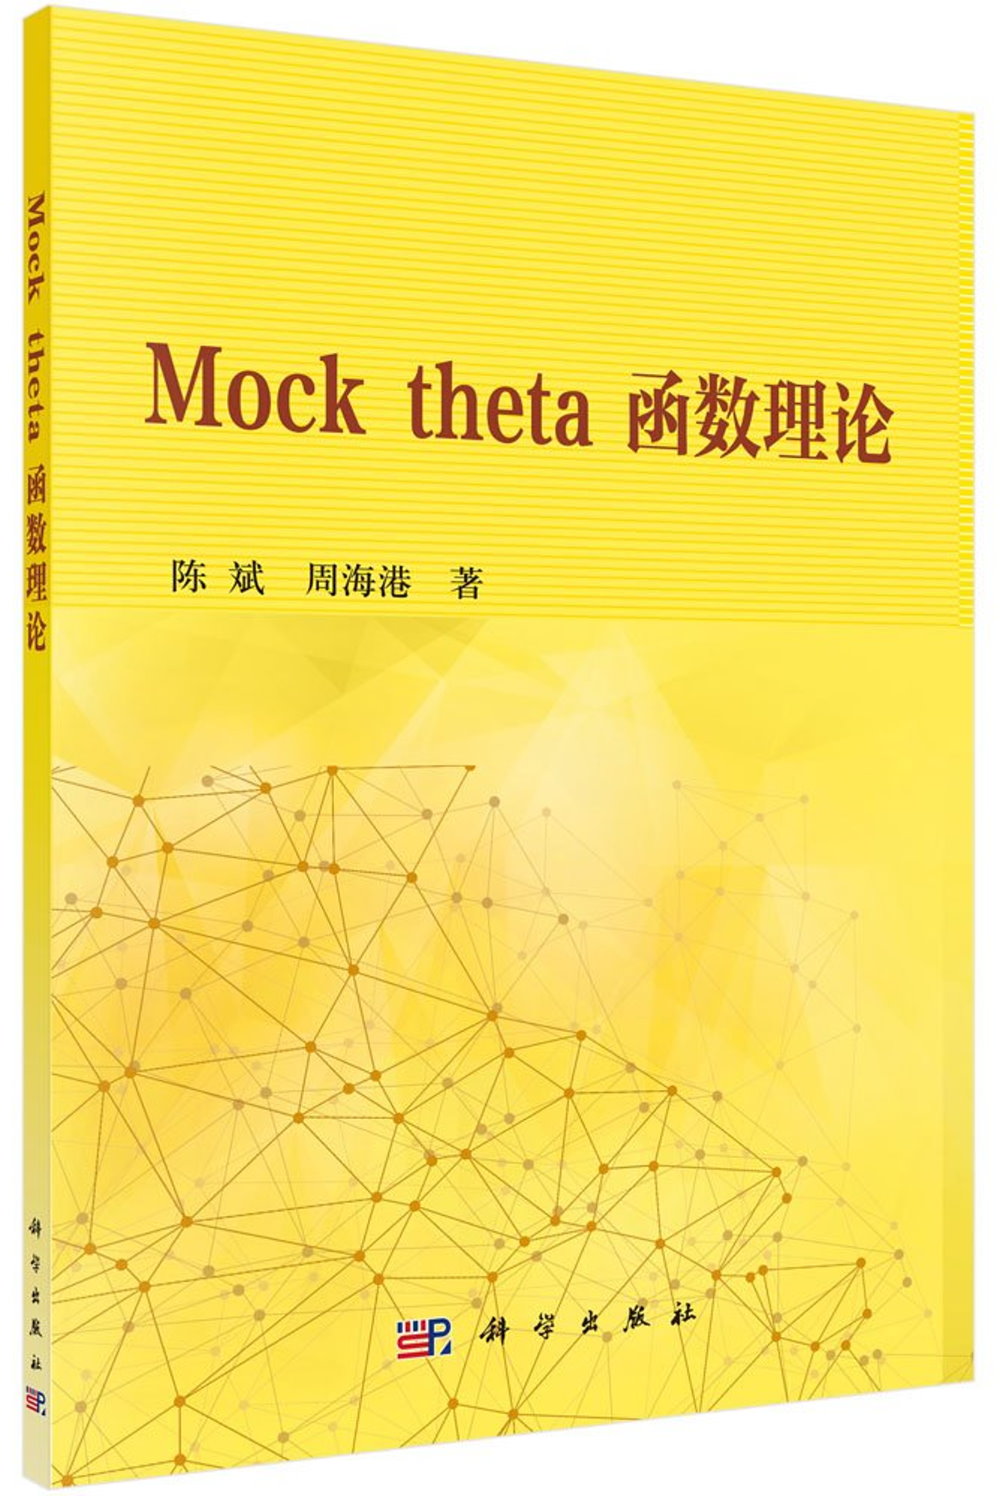 Mock theta 函數理論